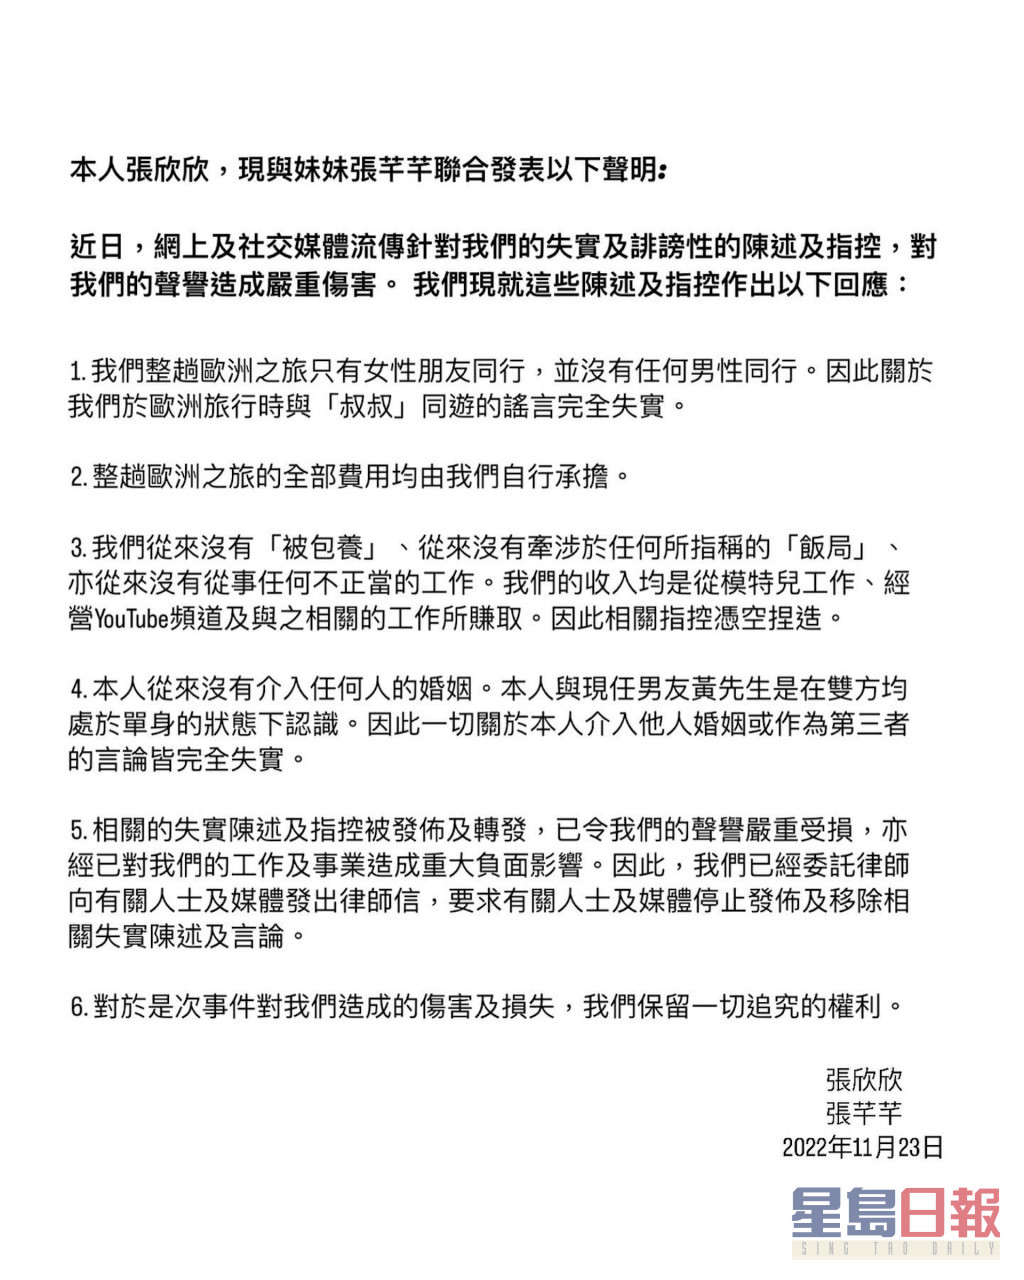 KOL「Sean Lam」爆料指张欣欣疑被包养，事后张欣欣与妹妹张芊芊联合发声明。